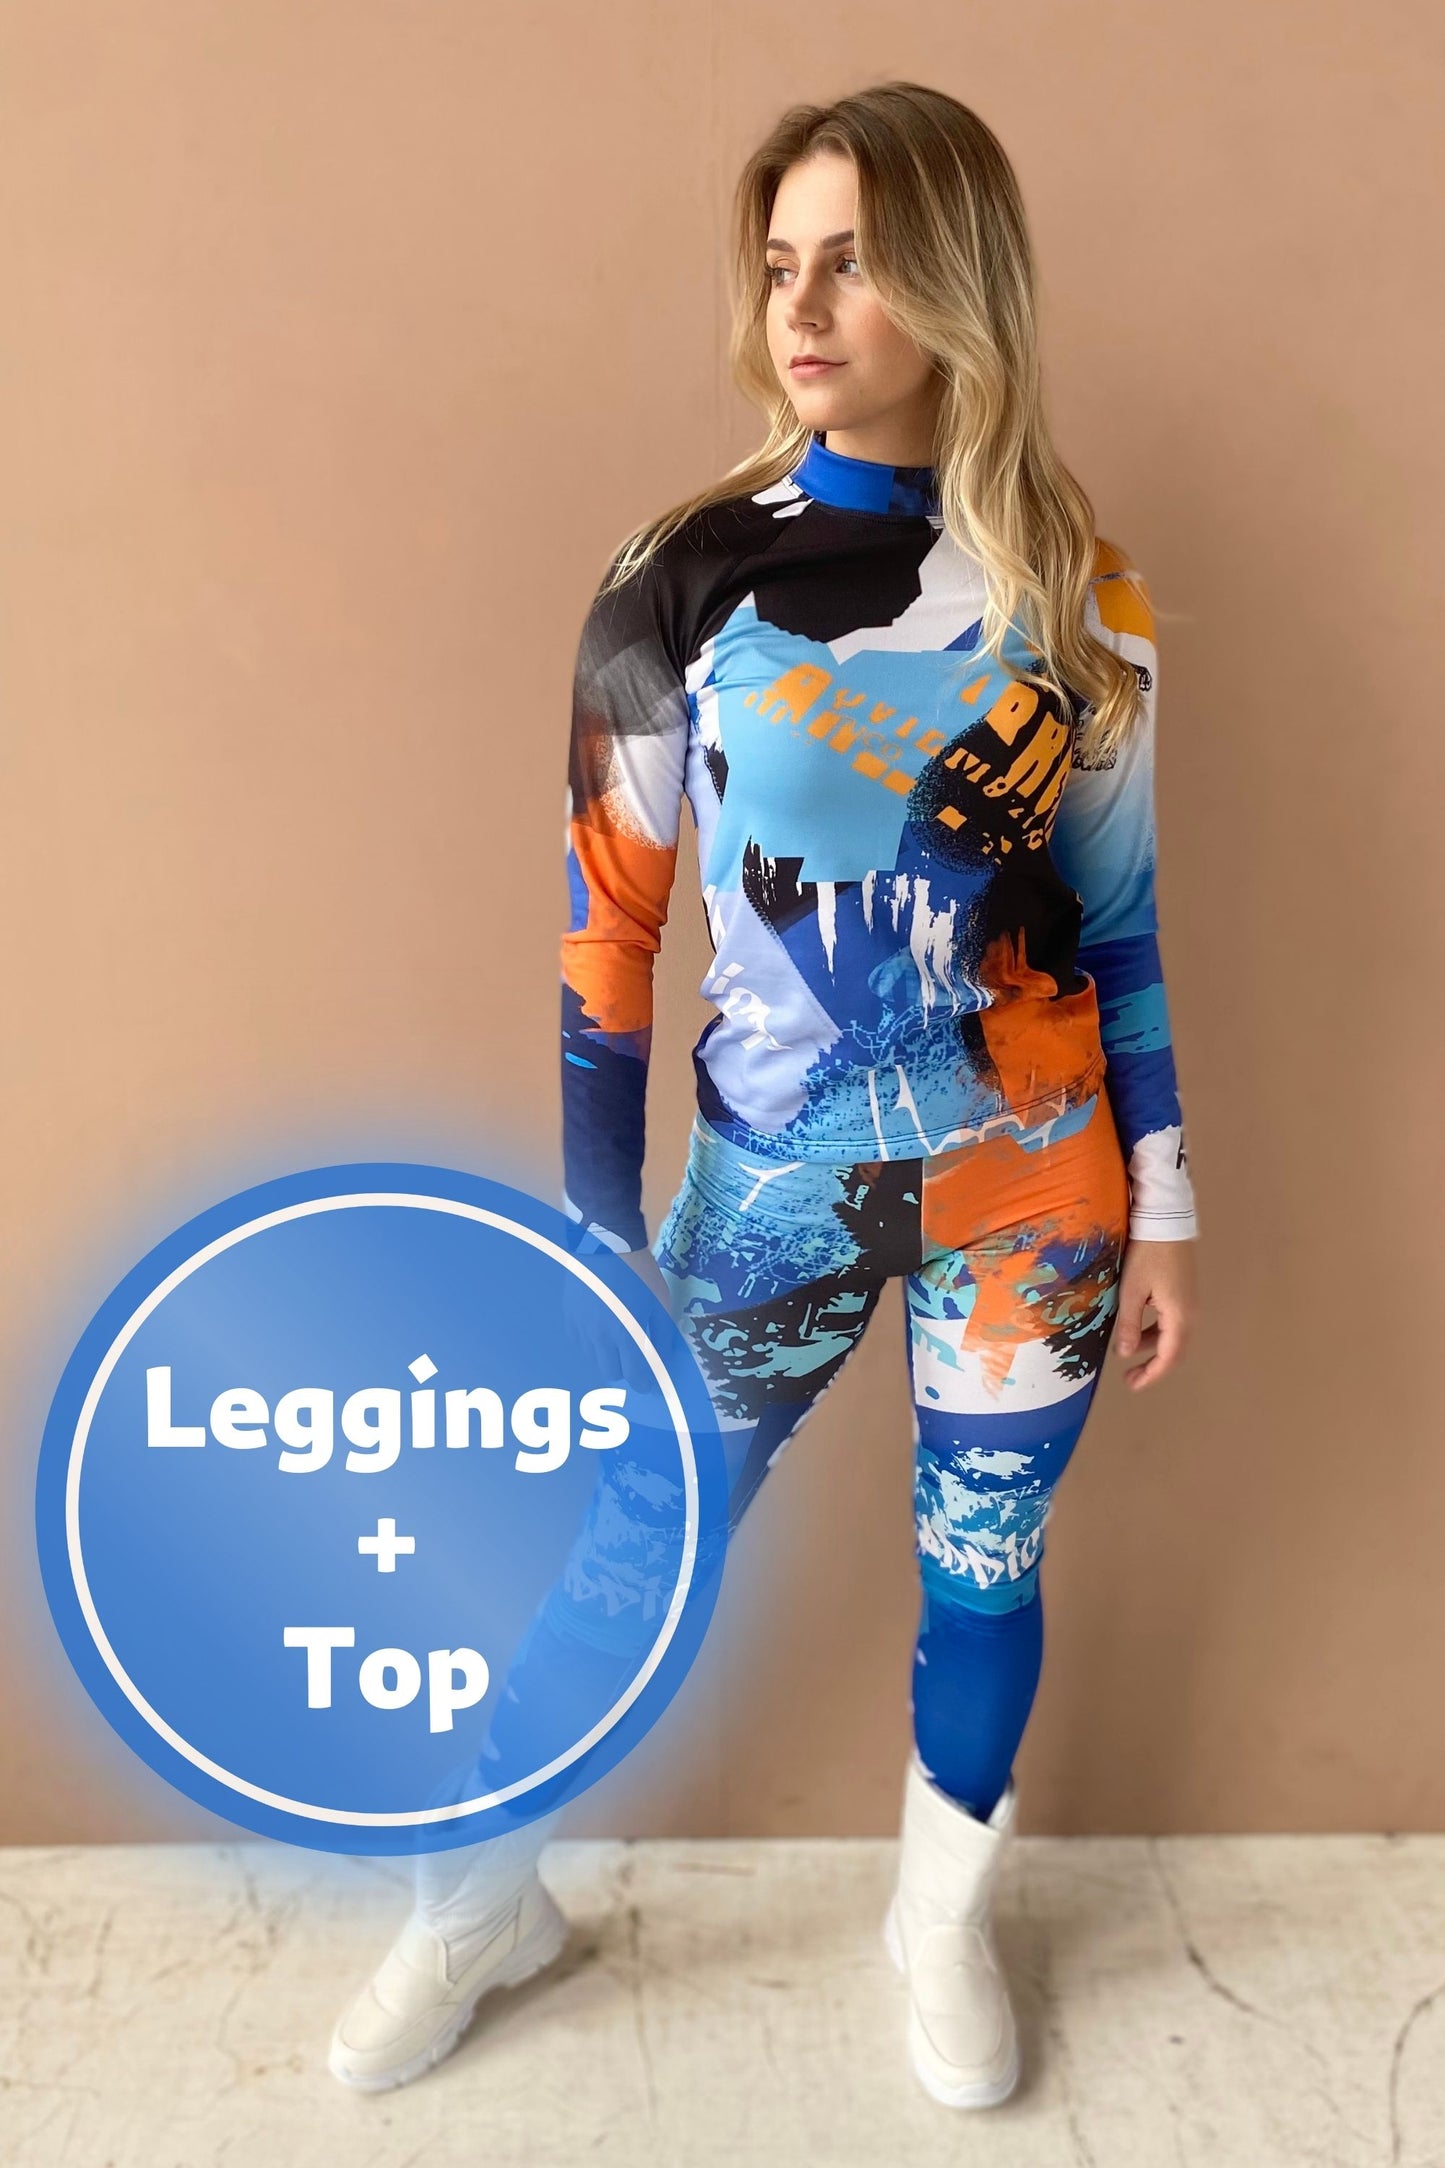 SET: Damen-Thermobekleidung, Leggings, abstraktes buntes Top, Winterunterwäsche, Thermoschutz, Kleidung, Sportunterwäsche, Winterkleidung